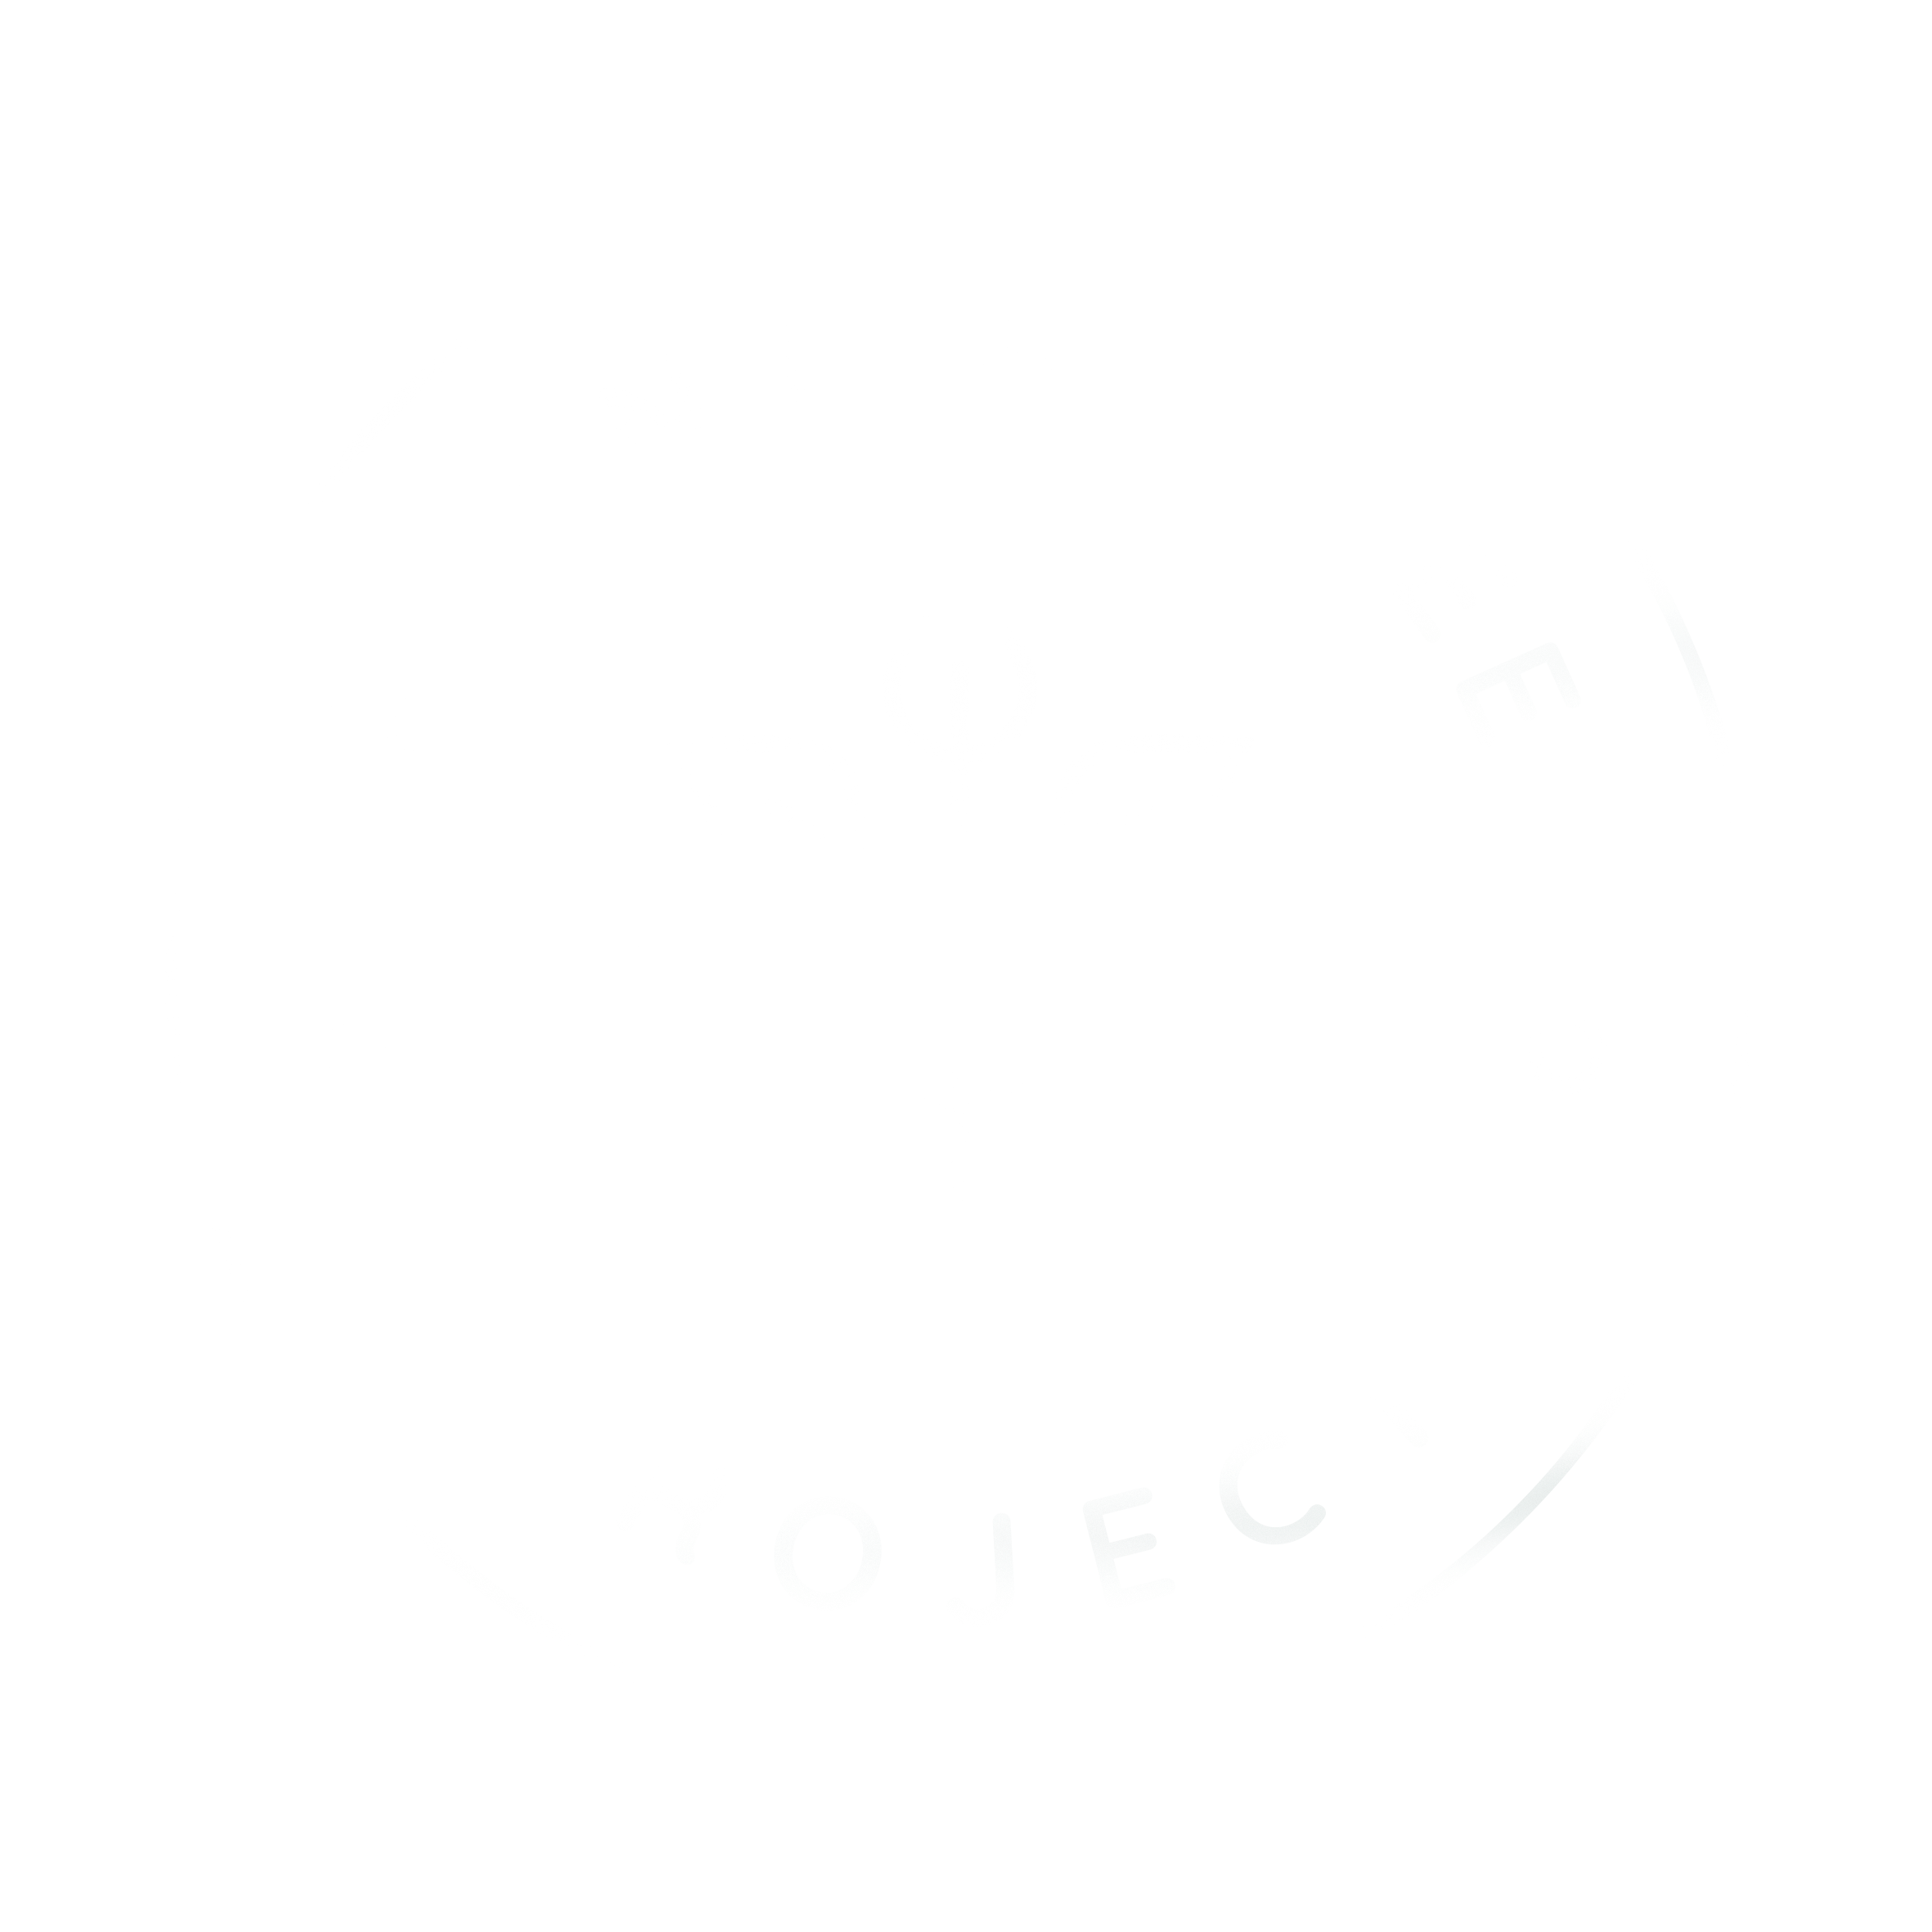 Plant a tree project logo